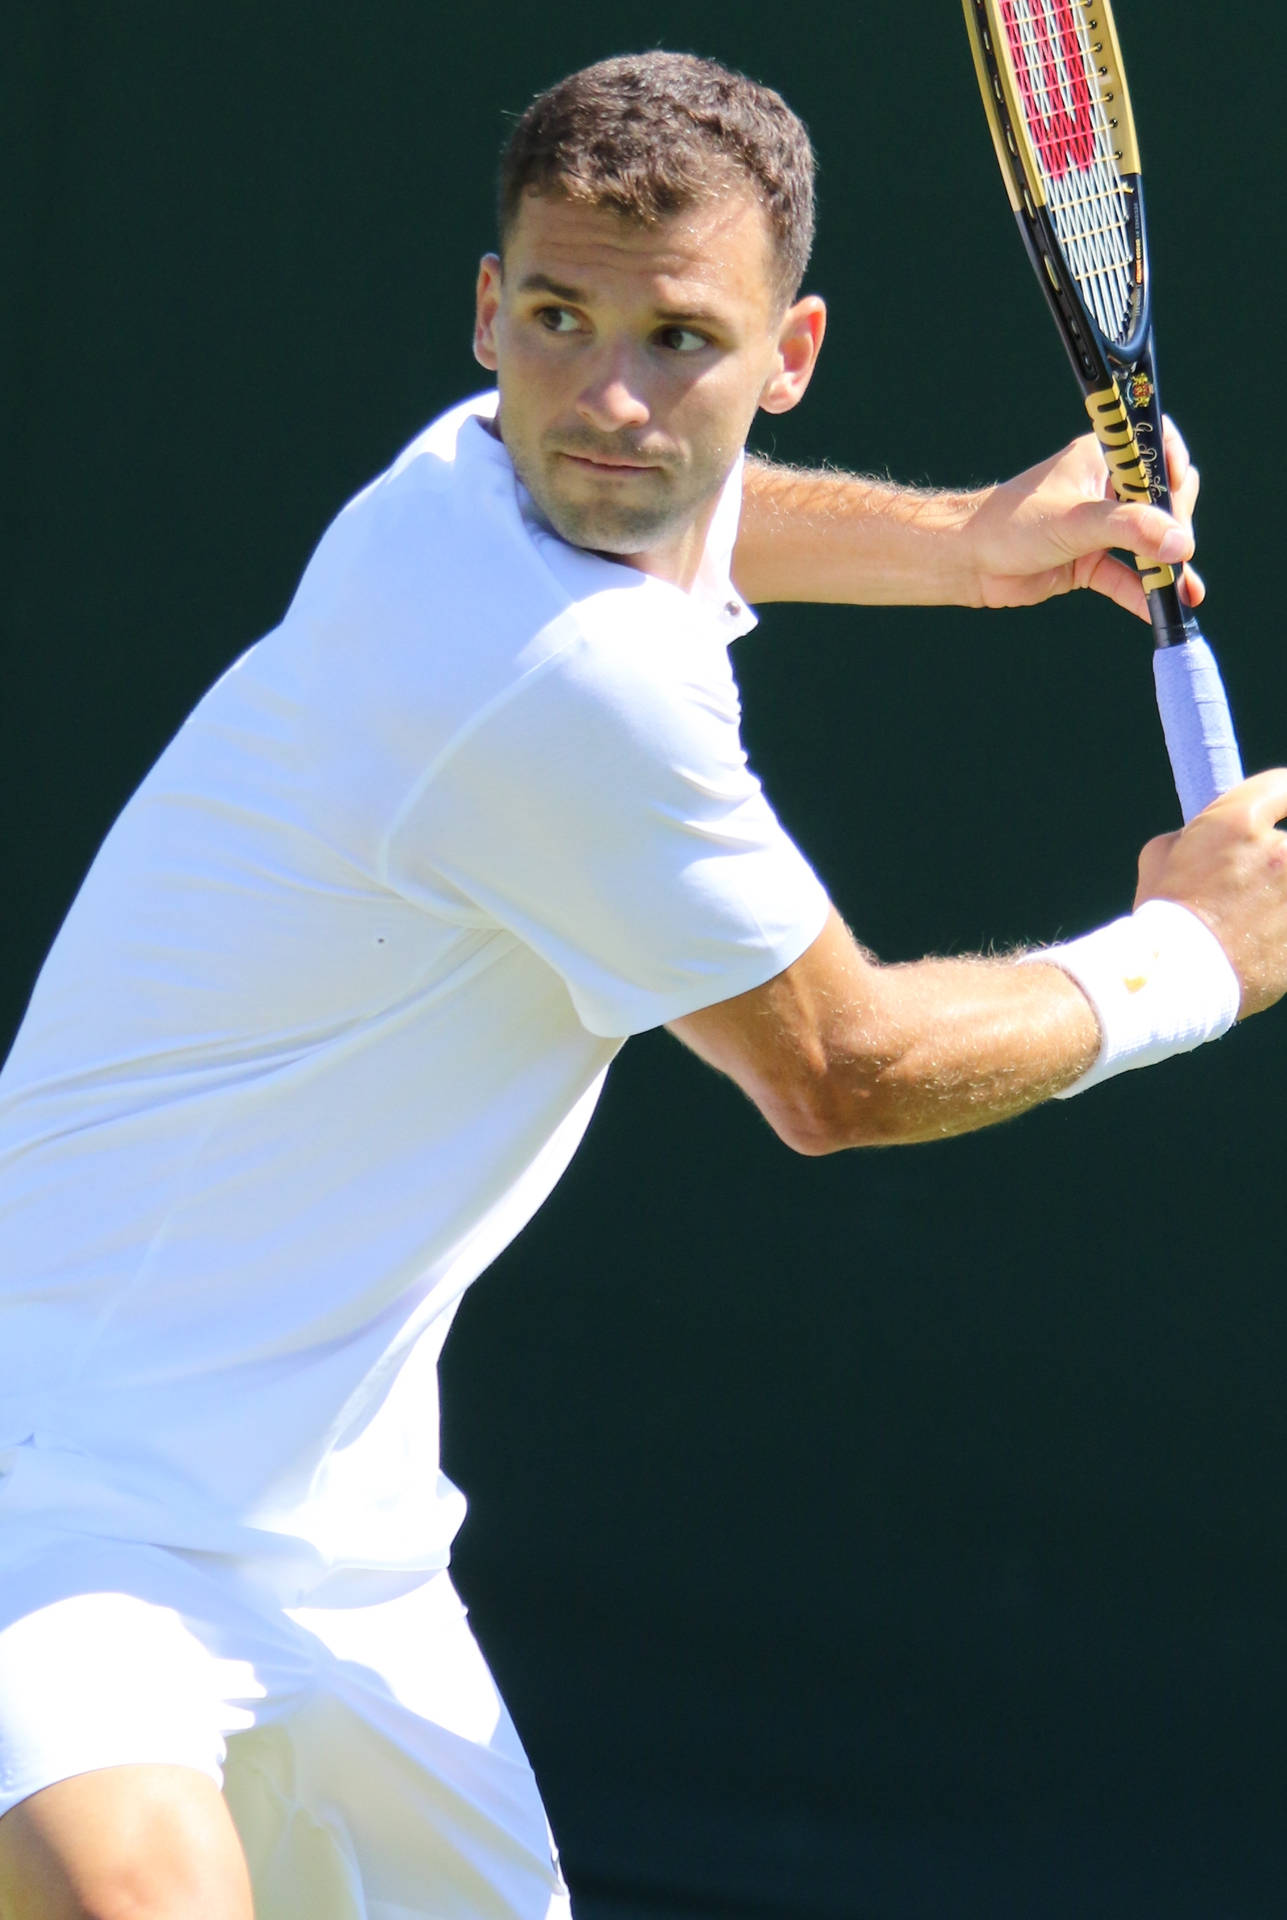 "Tennis Star Grigor Dimitrov in White Outfit." Wallpaper